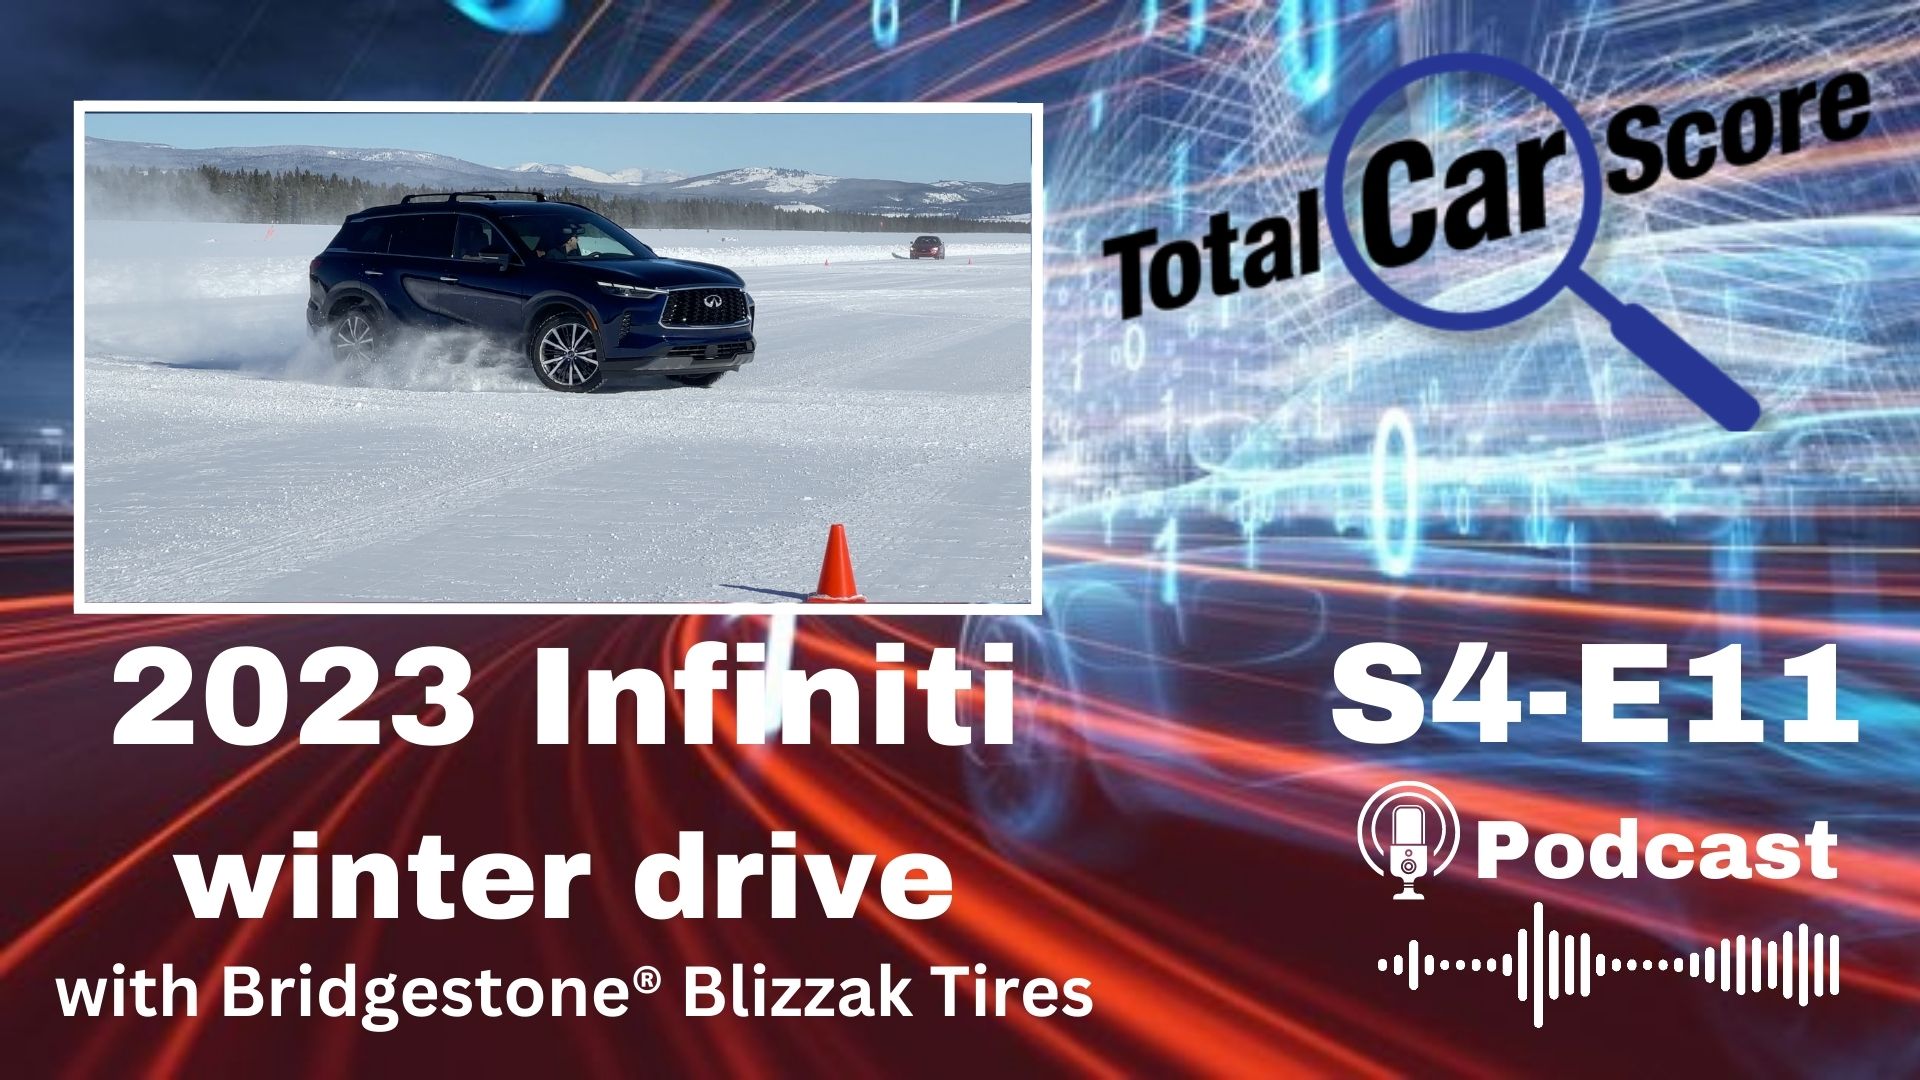 TCS S4 E11 2023 Infiniti Winter Drive With Bridgestone Blizzak Tires